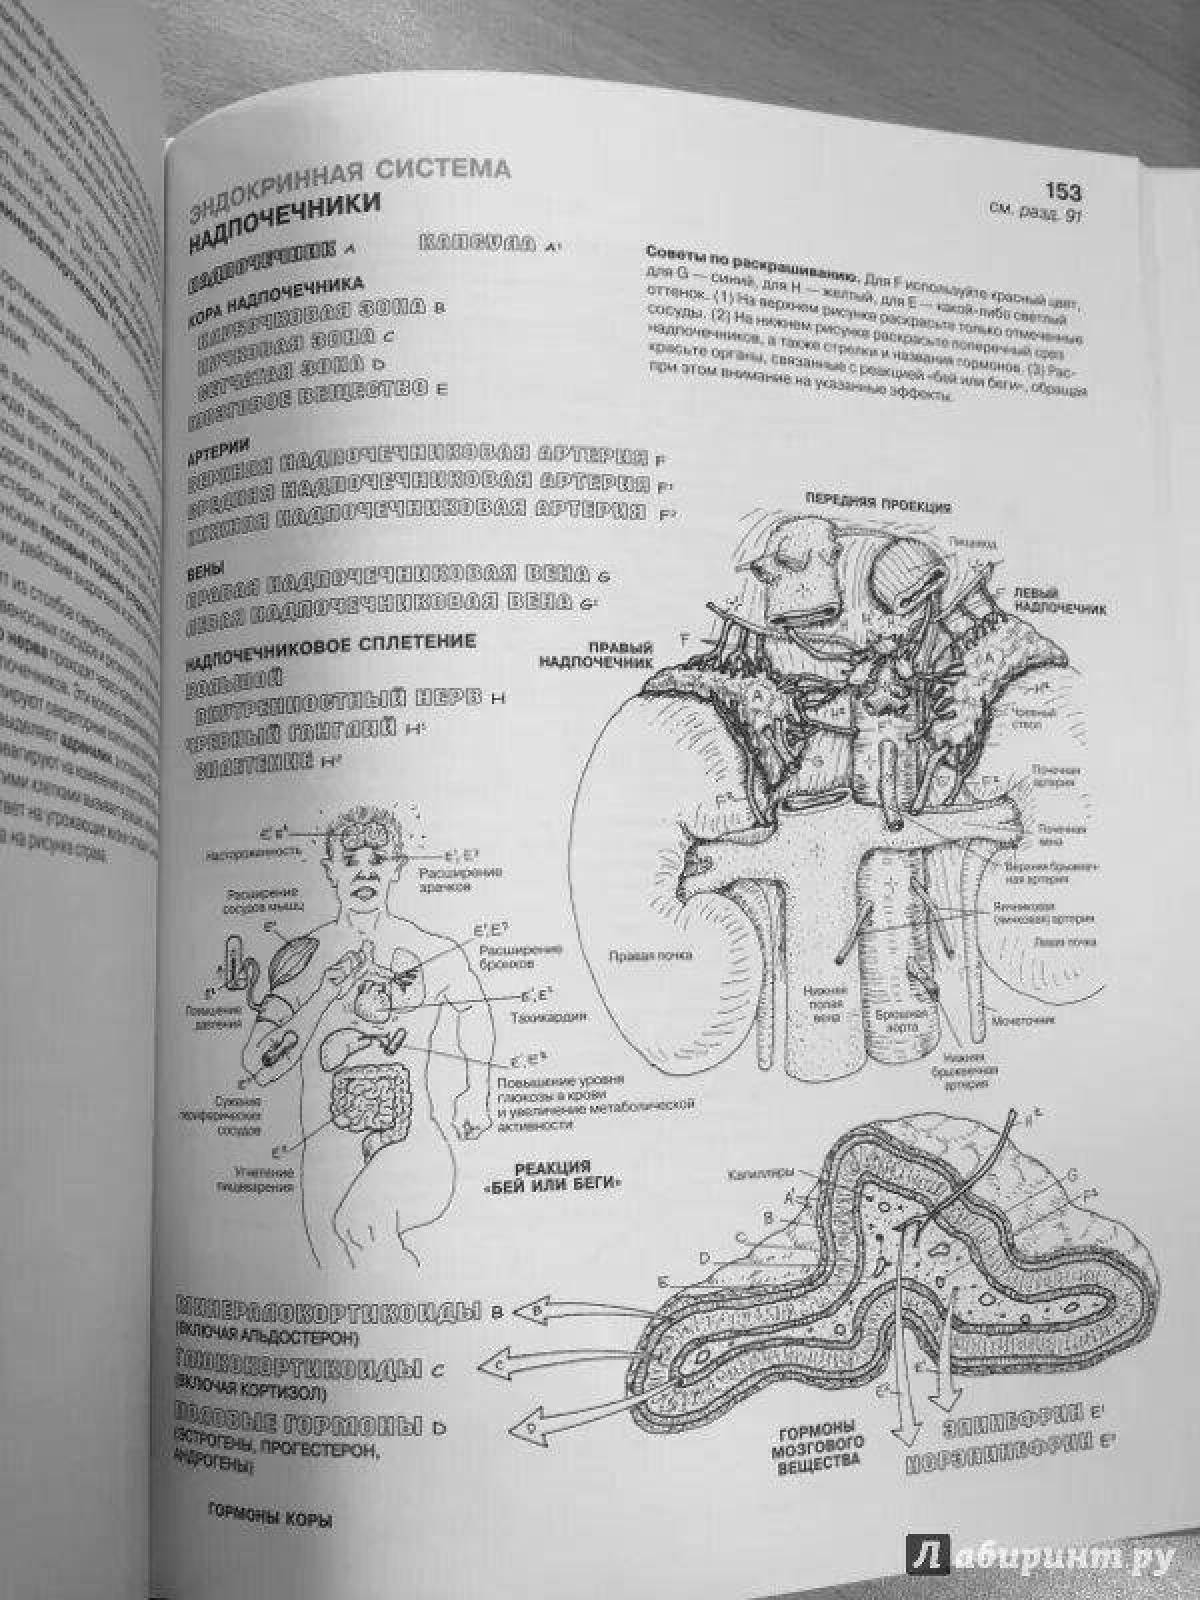 Atlas of human physiology #12